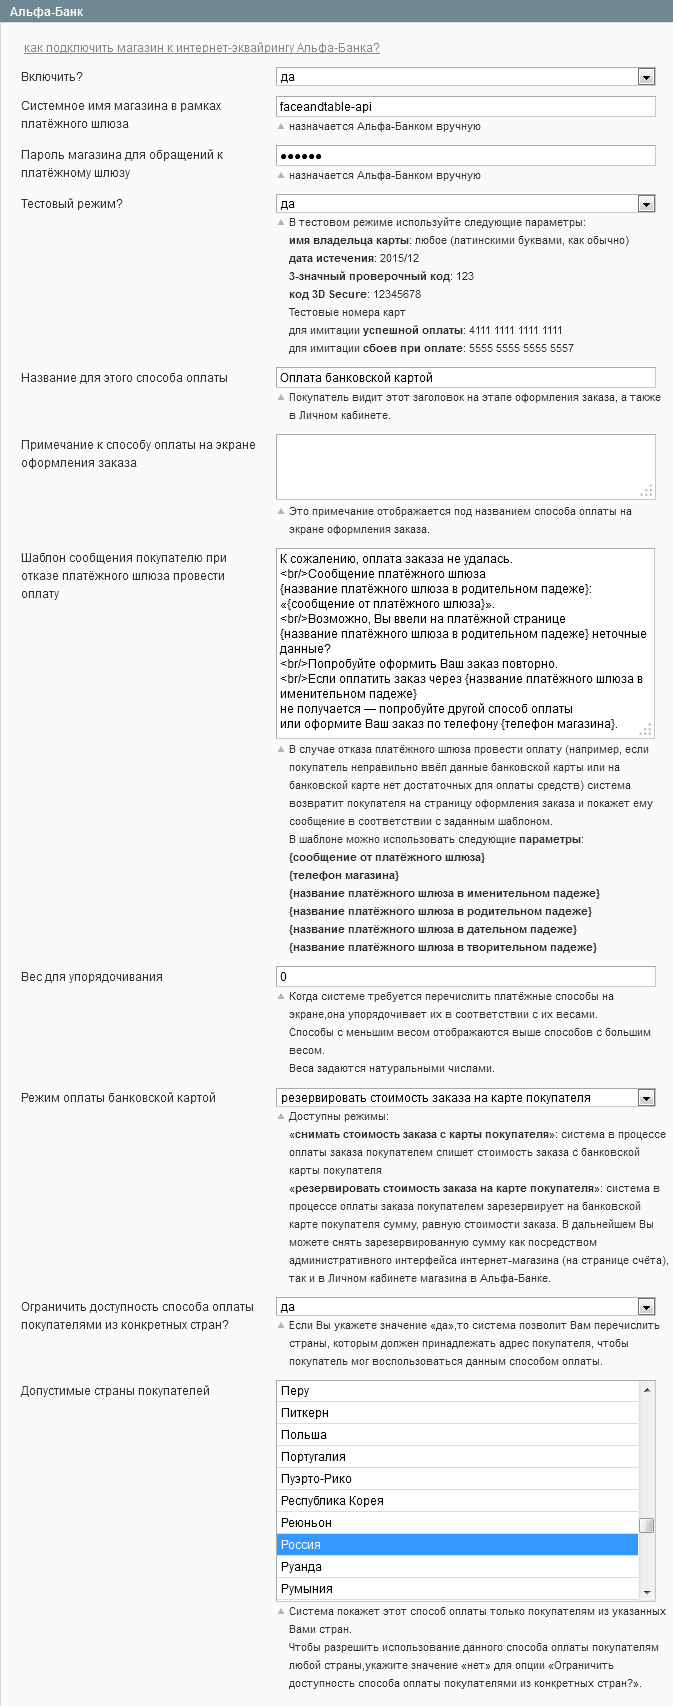 Прикрепленное изображение: magento-alfabank-russian-payment-module-settings.png